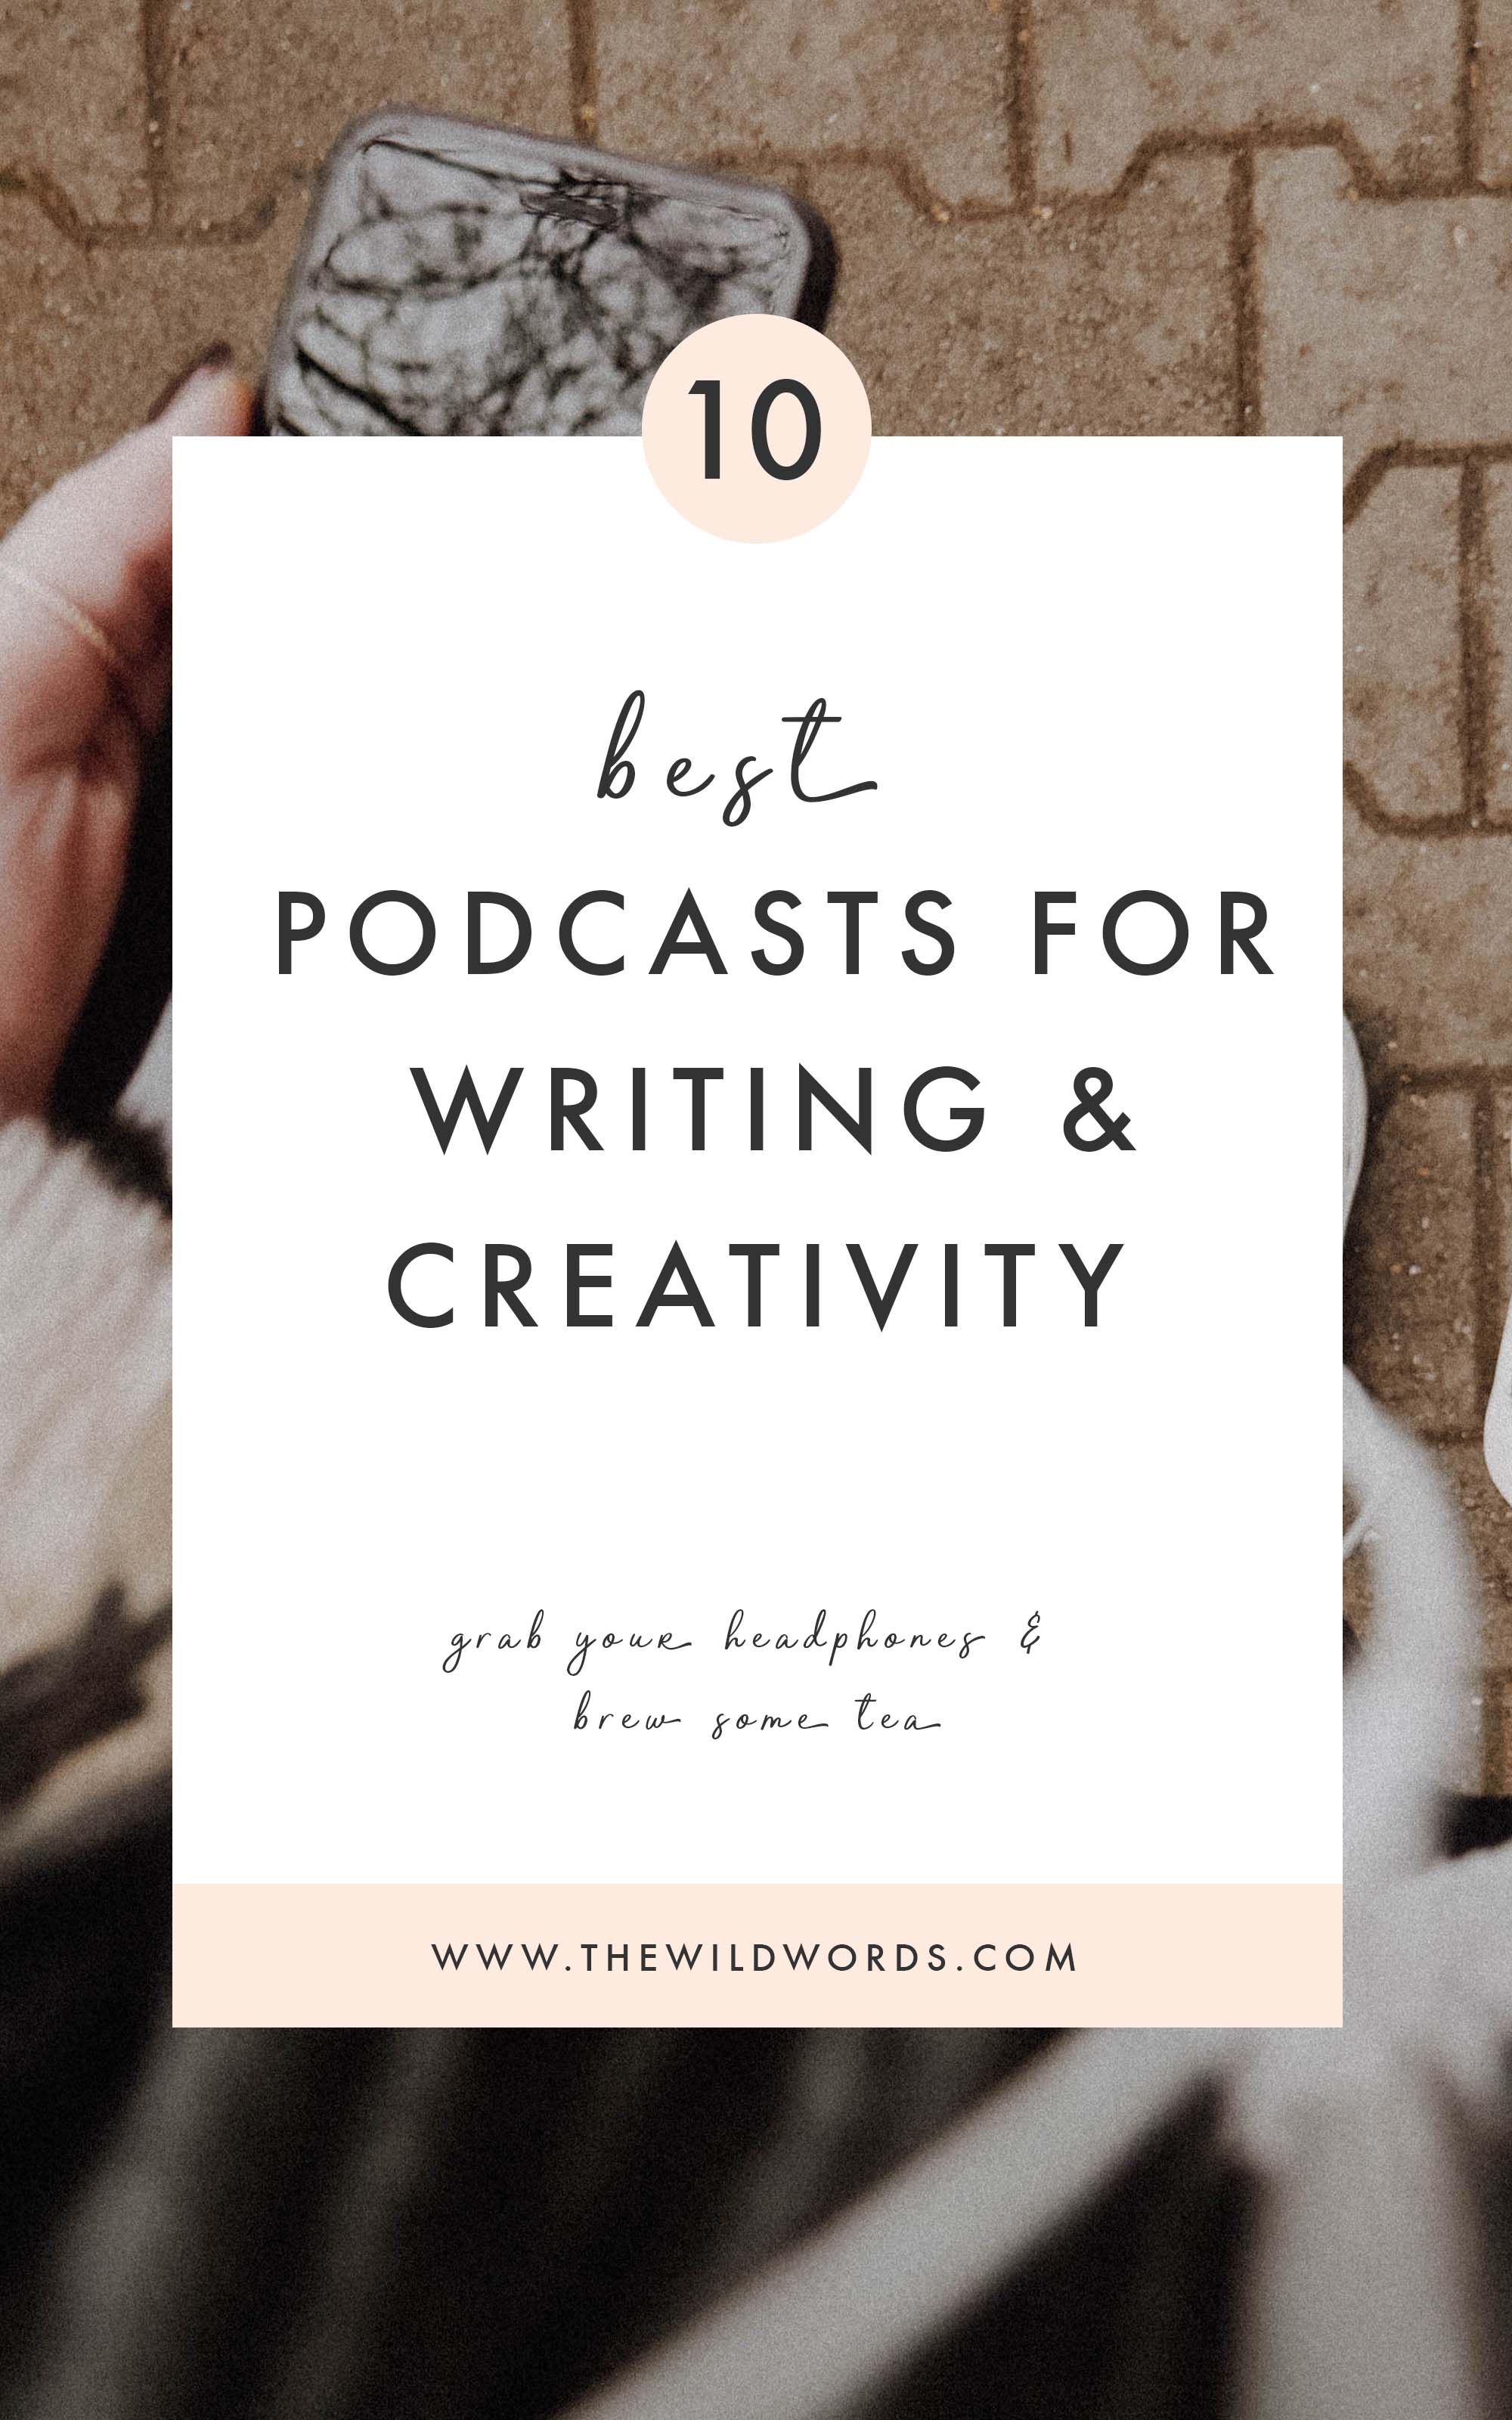 creative writing podcast